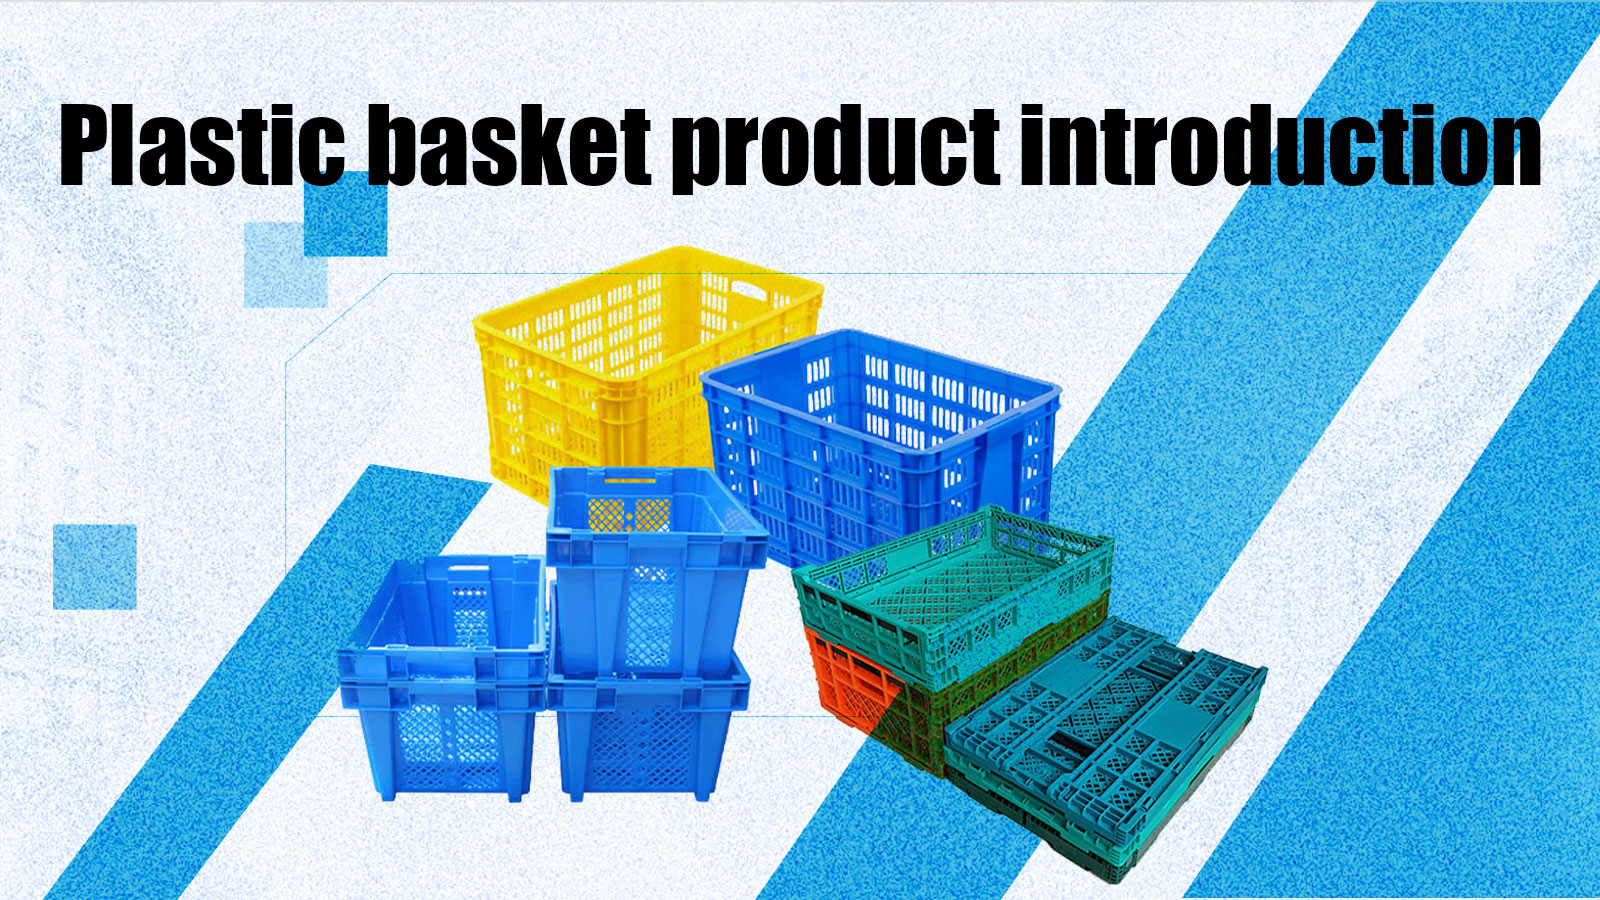 Plastic basket product introduction